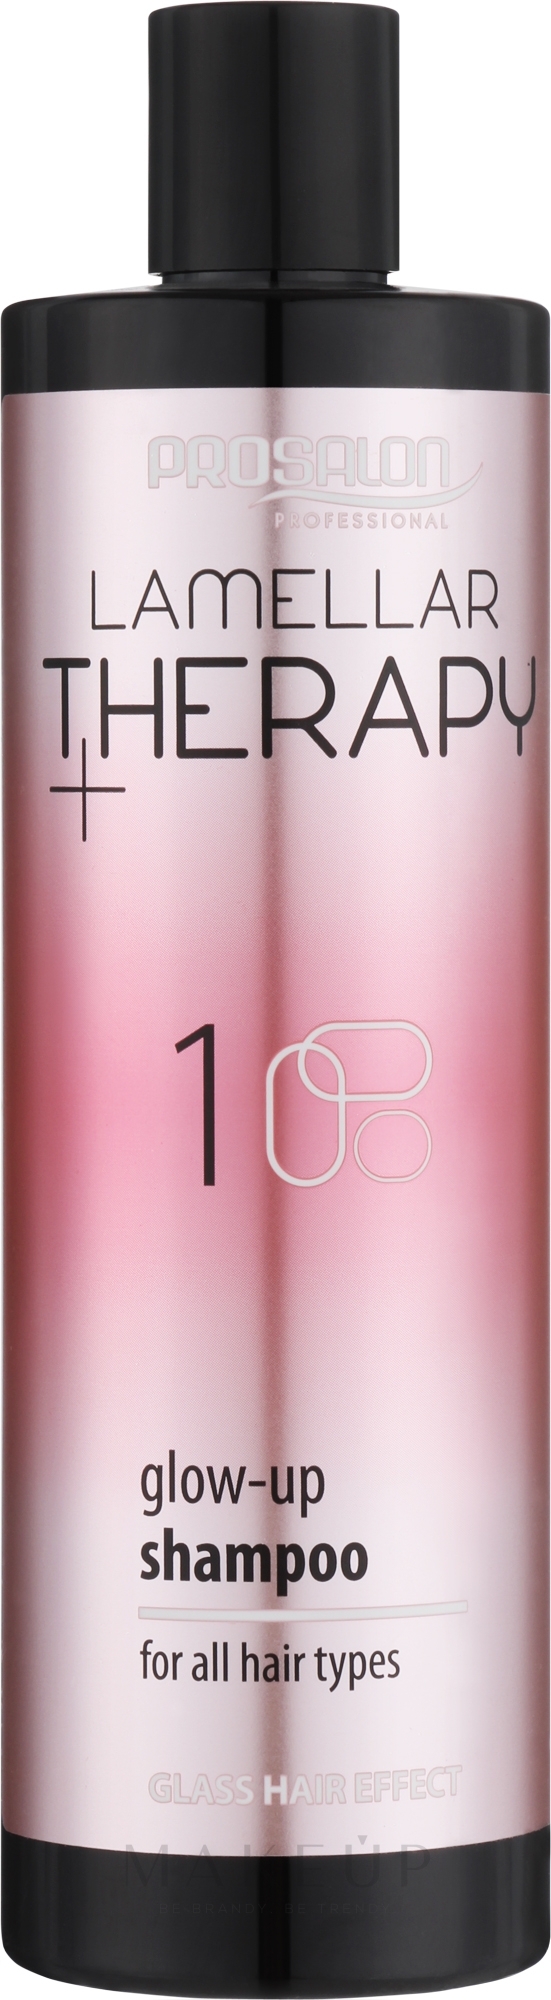 Shampoo für glänzendes Haar - Prosalon Lamellar Therapy+ 1 Glow-Up Shampoo — Bild 400 ml